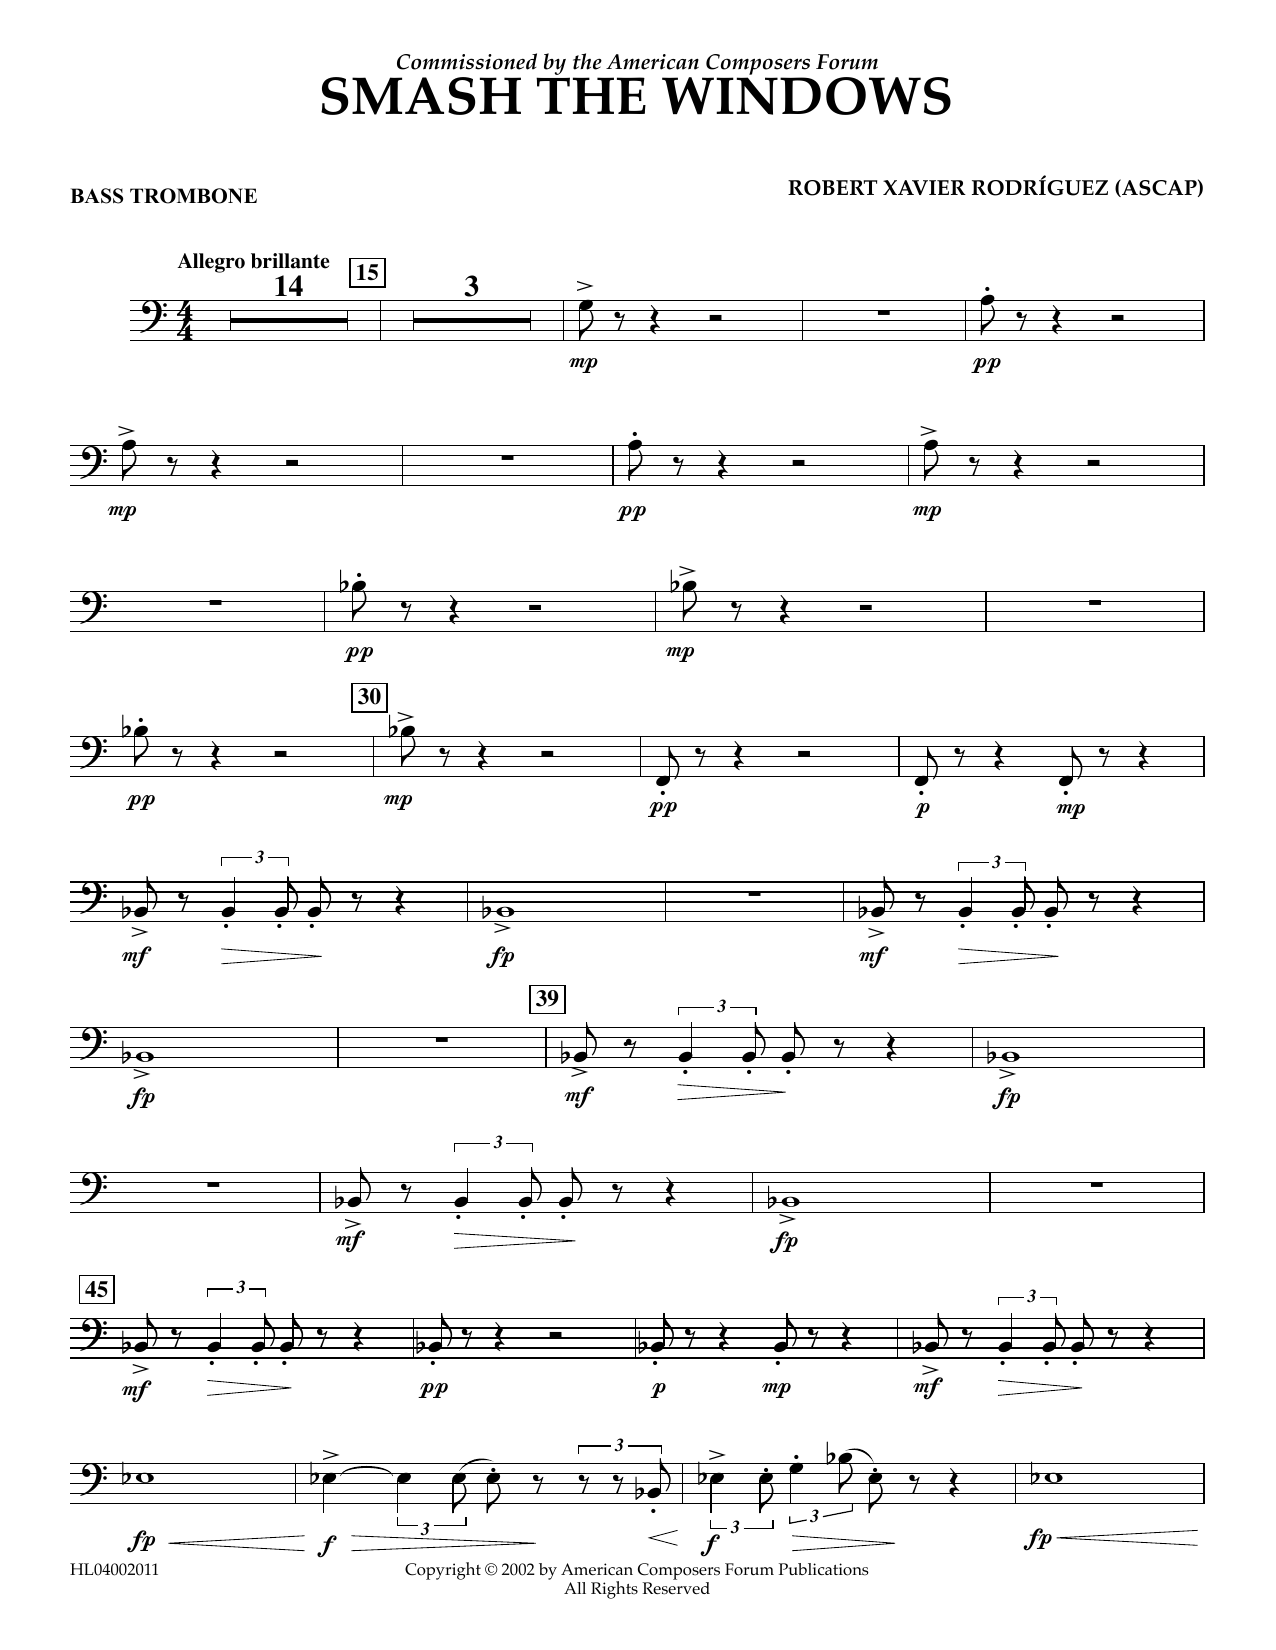 Robert Xavier Rodríguez Smash the Windows - Bass Trombone Sheet Music Notes & Chords for Concert Band - Download or Print PDF